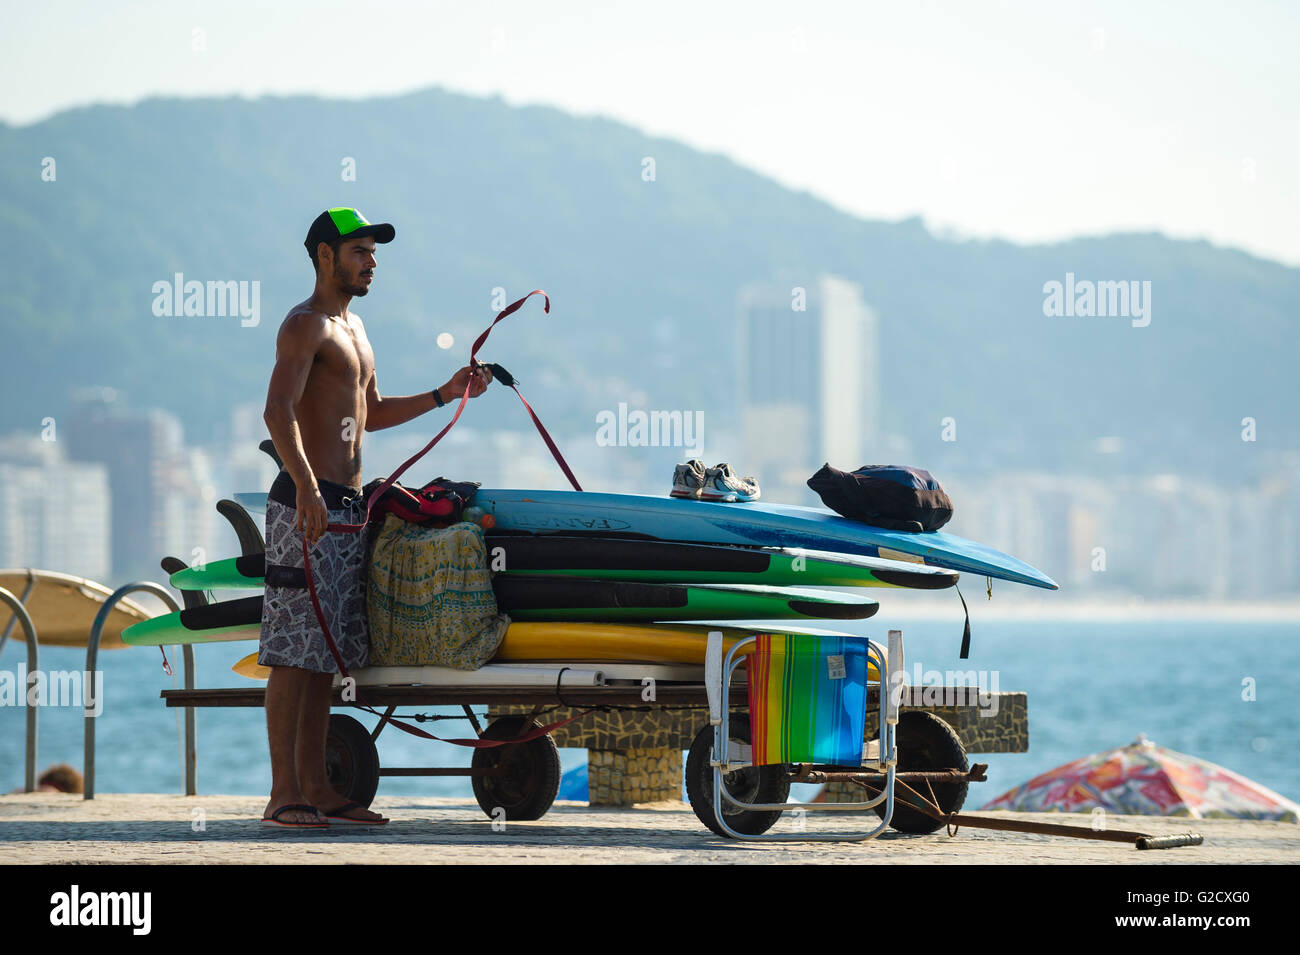 RIO DE JANEIRO - APRIL 5, 2016: Young carioca Brazilian man unpacks a stack of stand up paddle surfboards on Copacabana Beach. Stock Photo